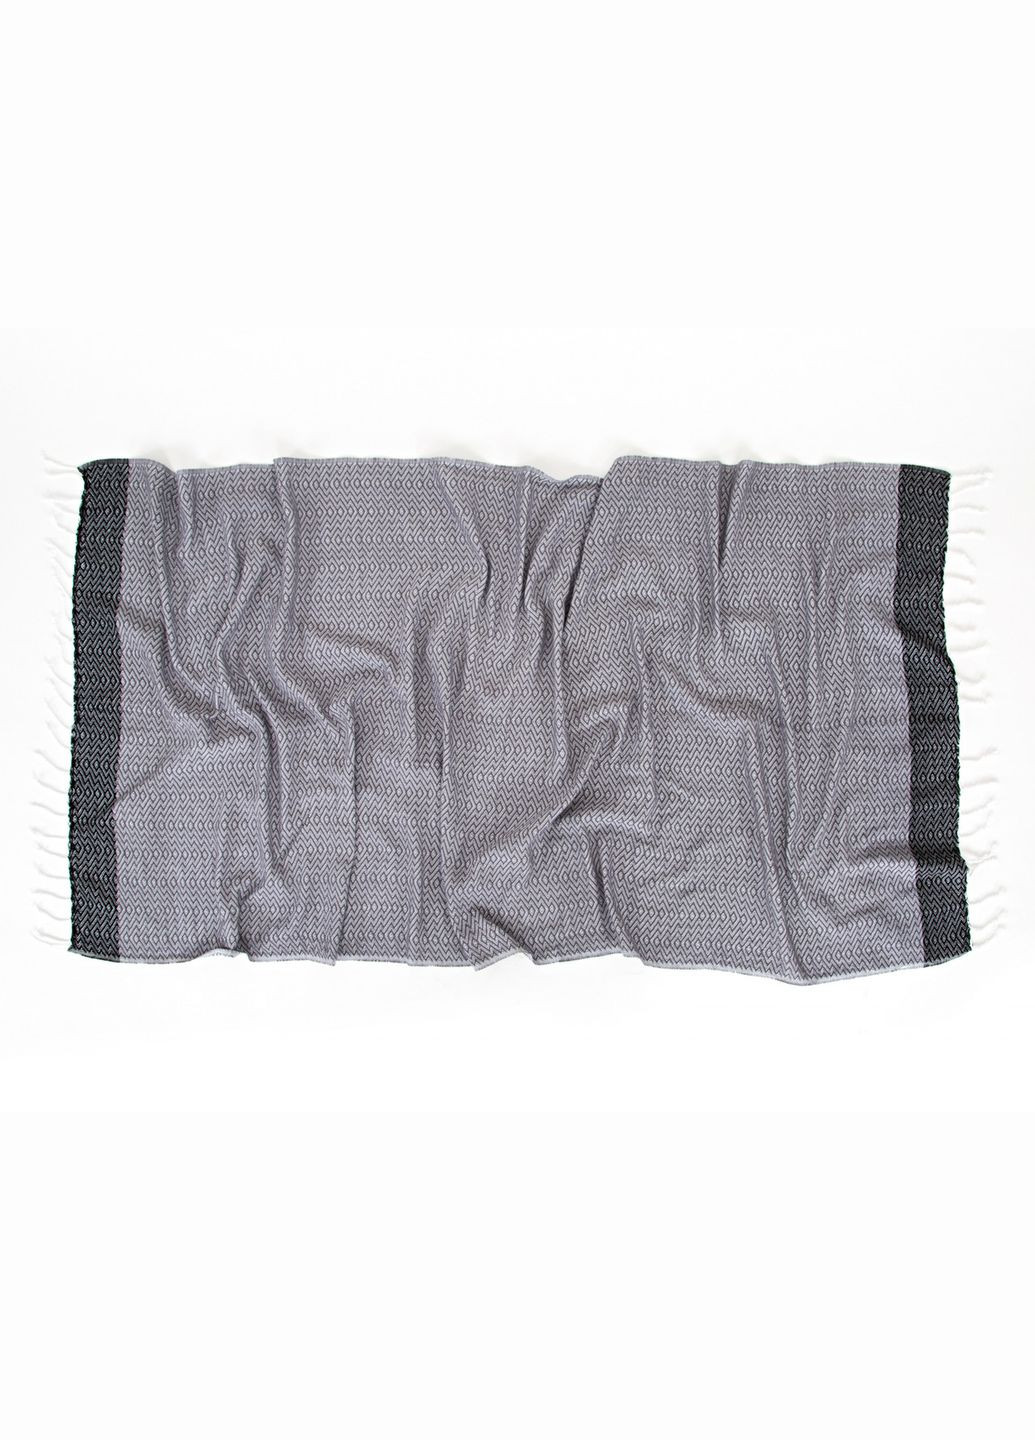 Irya полотенце - dila siyah черный 90*170 черный производство -